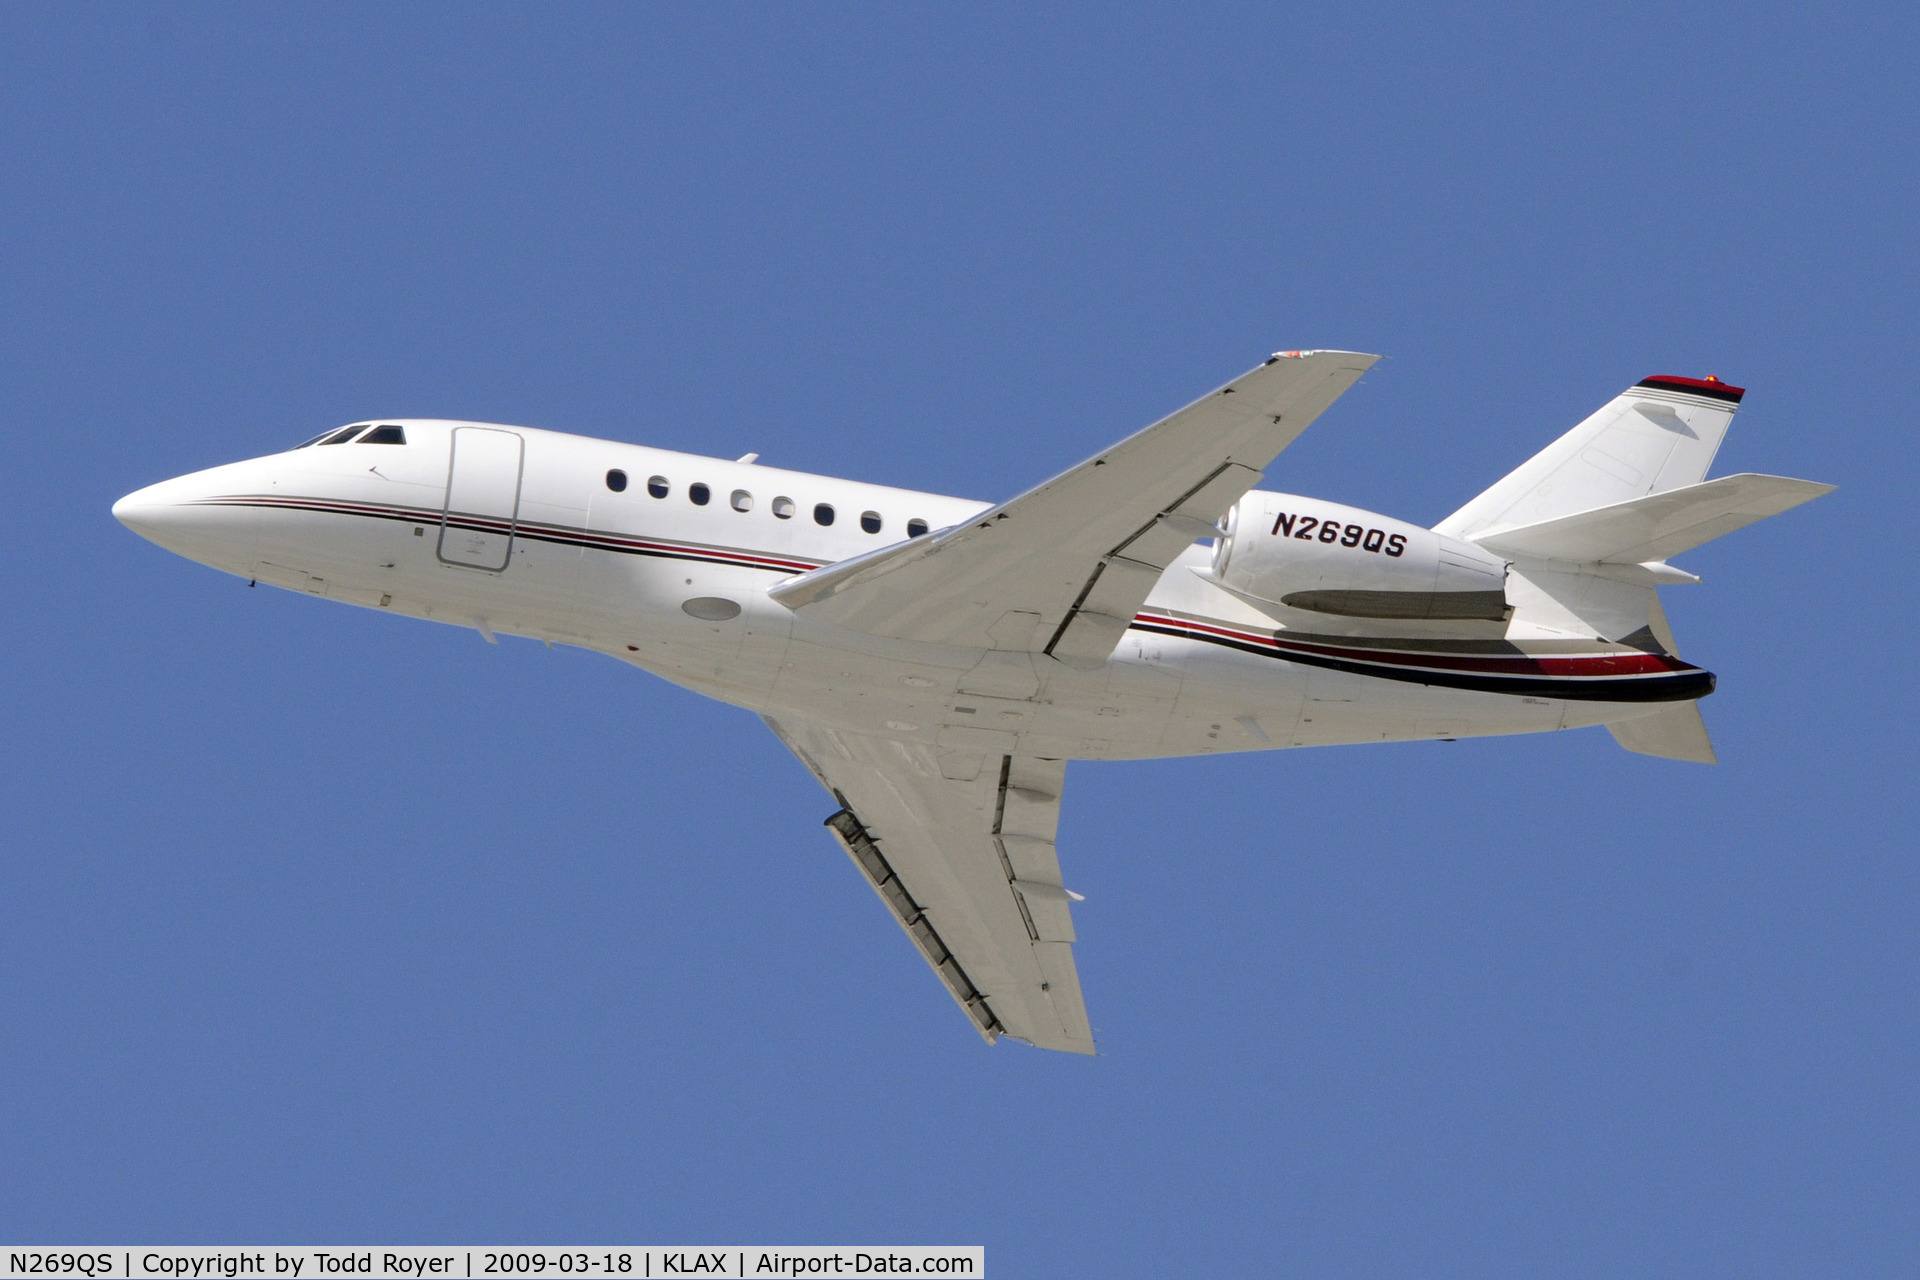 N269QS, 2002 Dassault Falcon 2000 C/N 169, Departing LAX on 25L